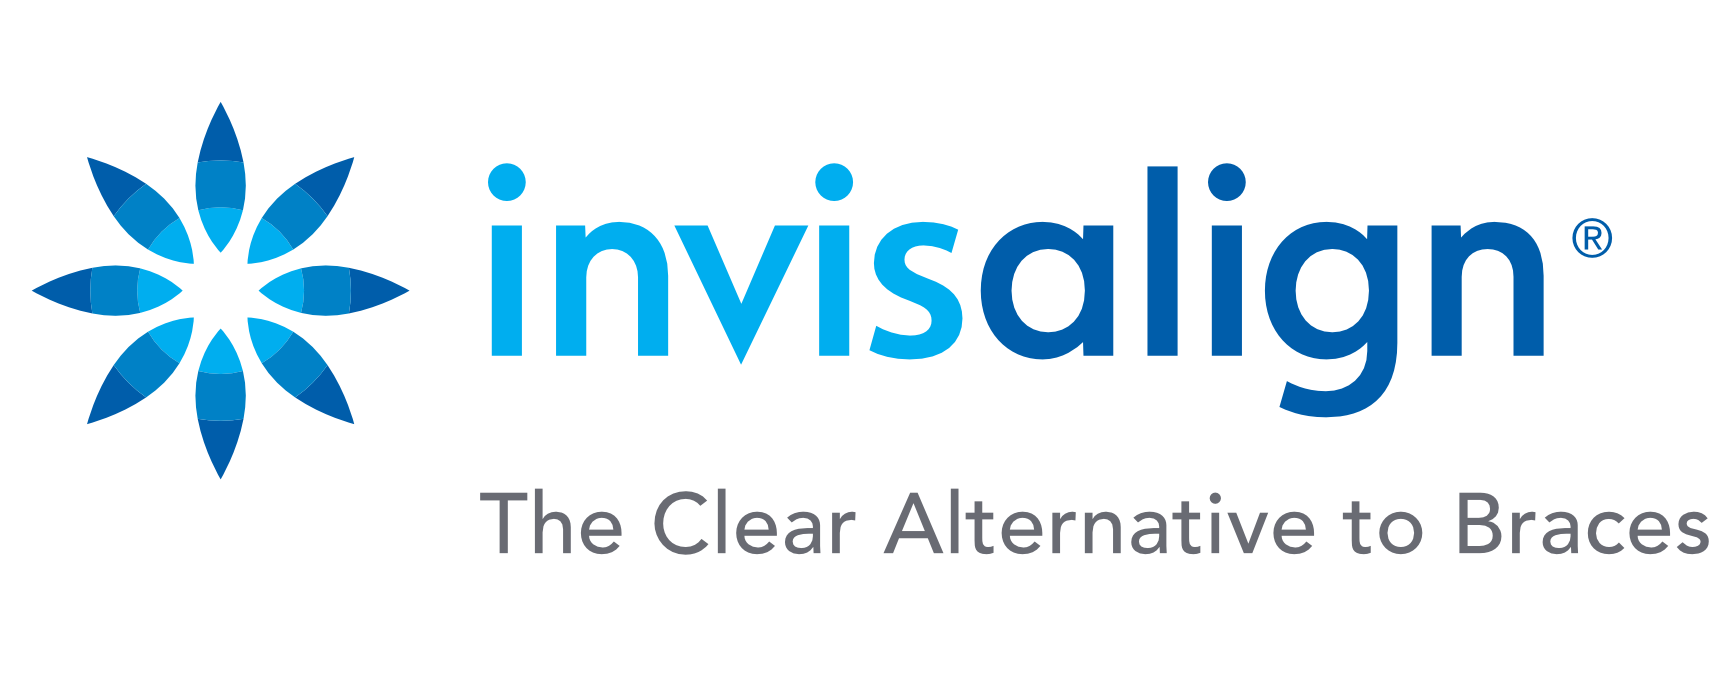 Invisalign-clear alternative logo